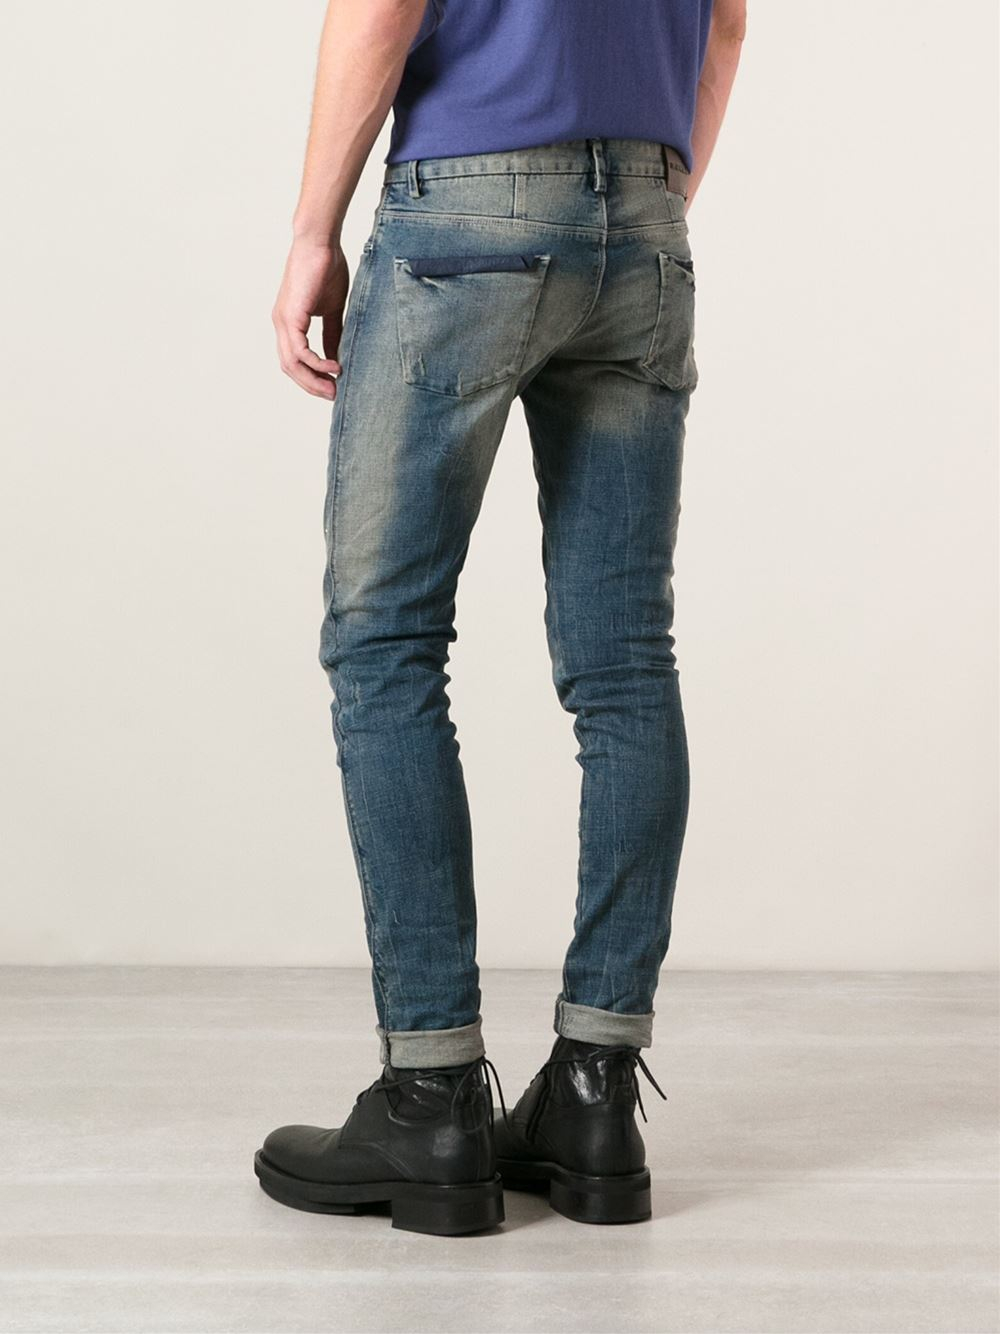 Lyst - Emporio Armani Skinny Jeans in Blue for Men